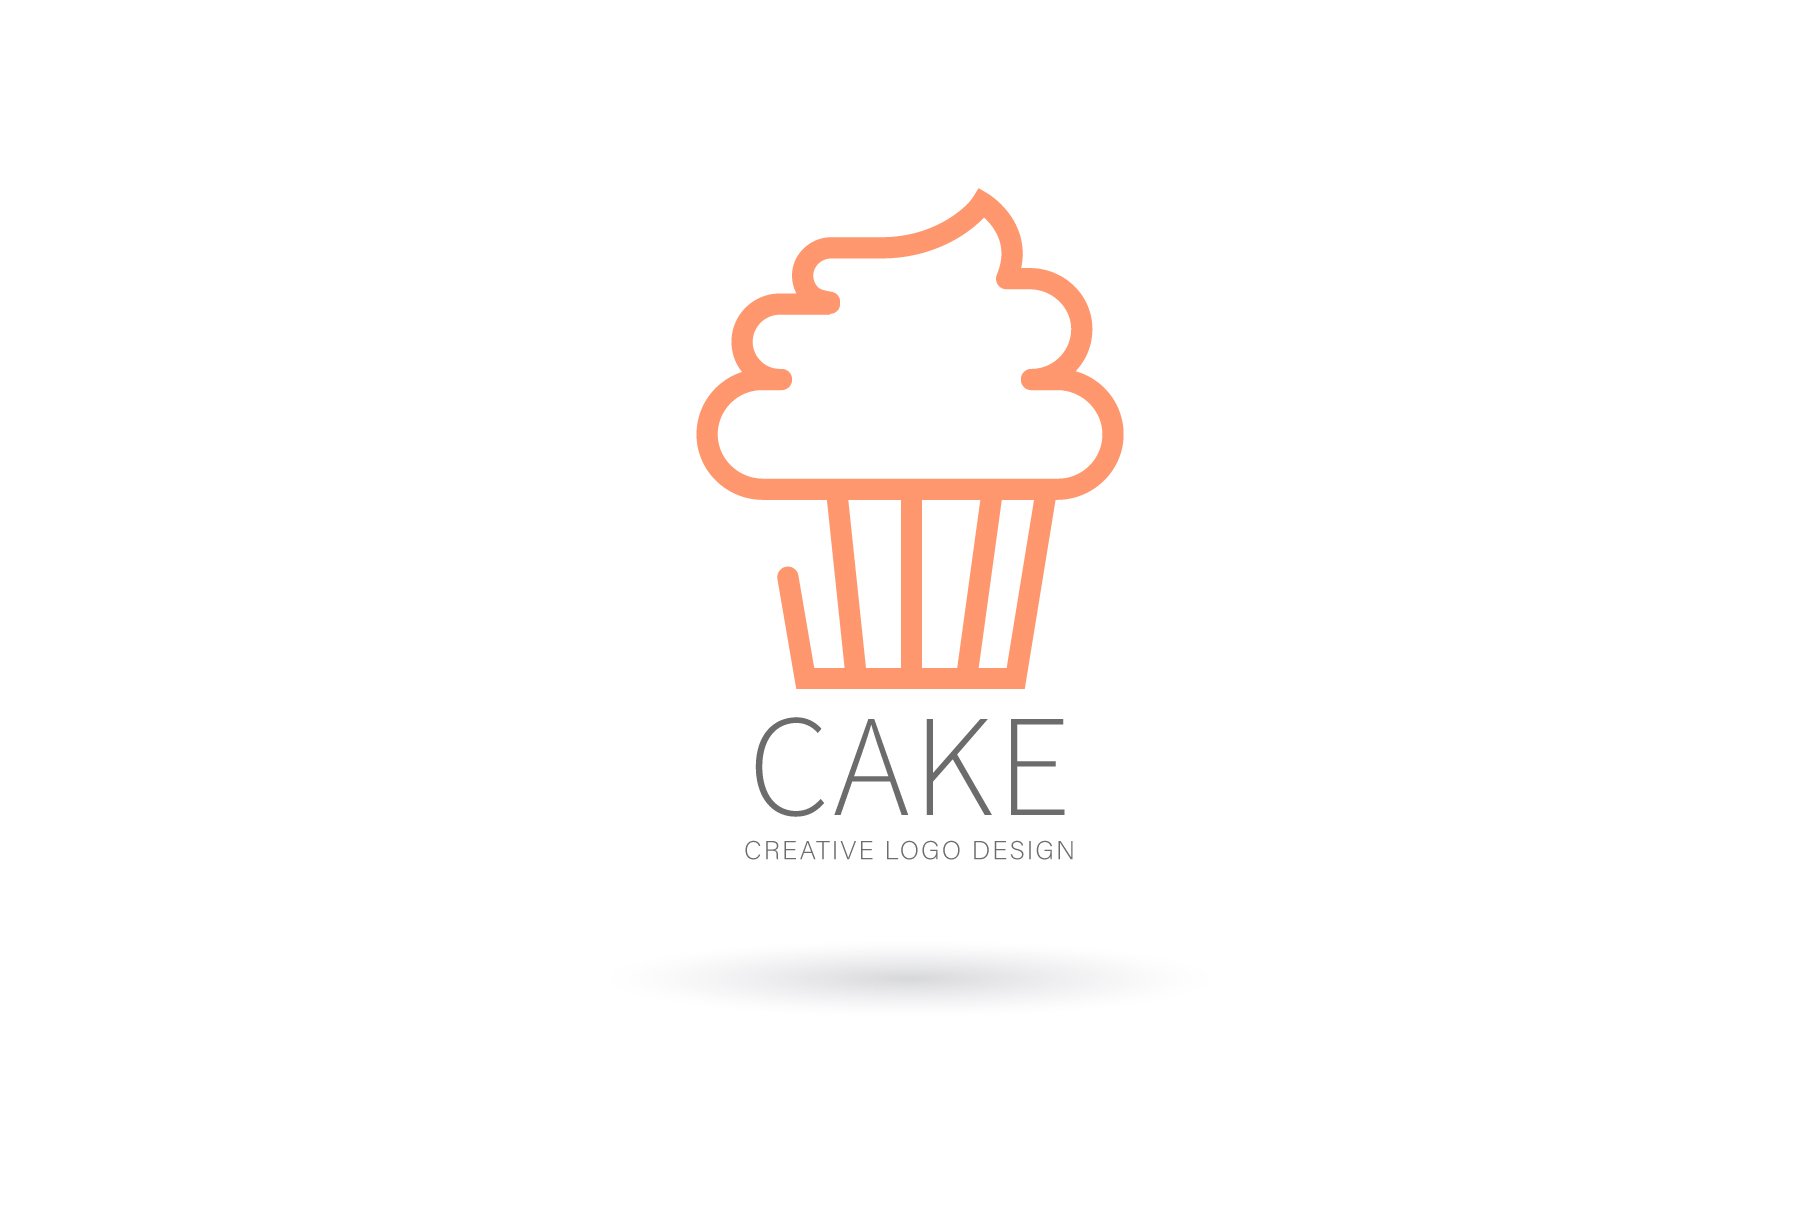 Cake logo cover image.